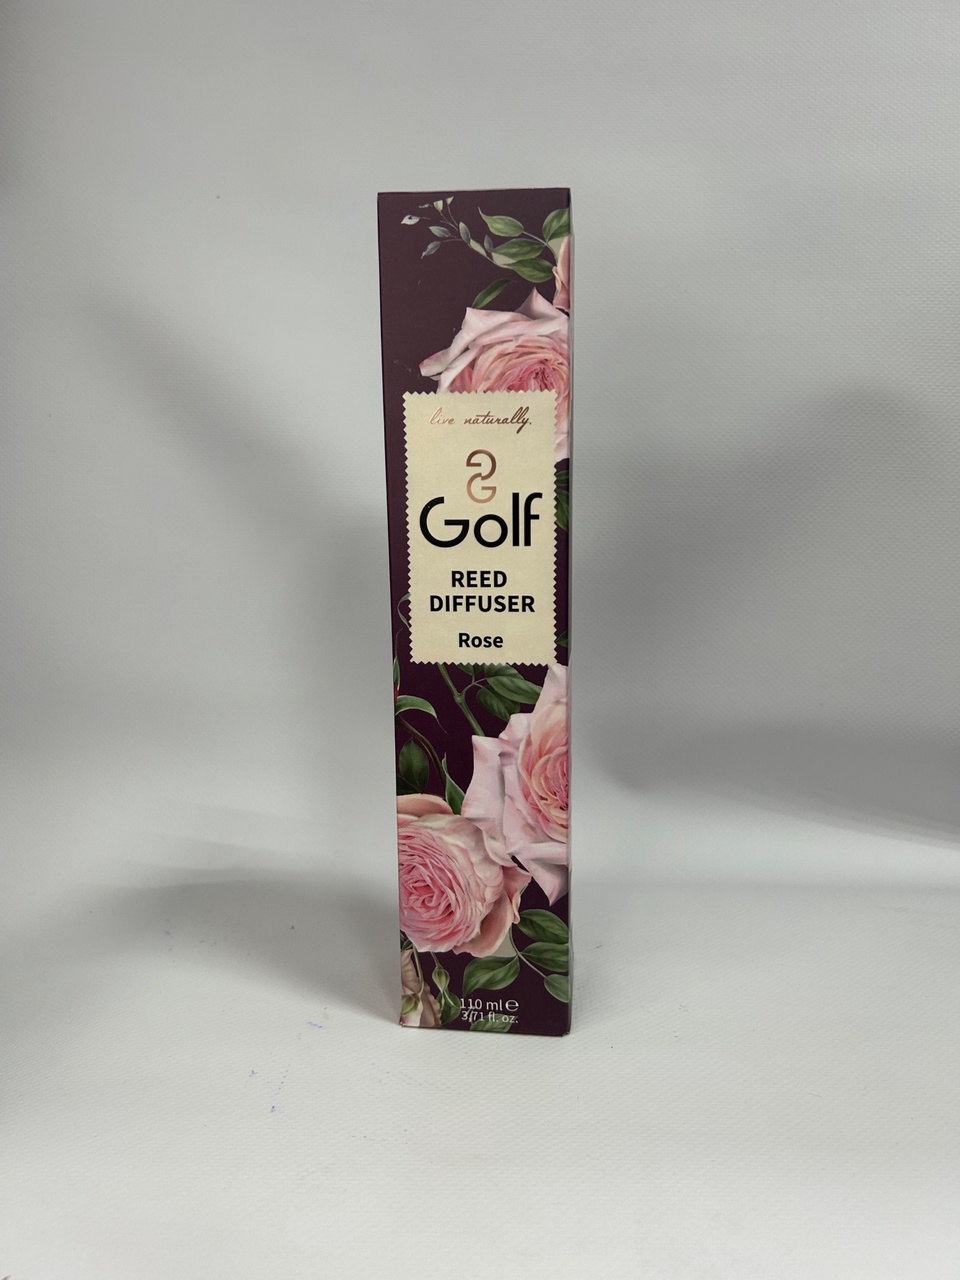 Ароматический диффузор Golf  “Роза”, 110 мл - 550 ₽, заказать онлайн.